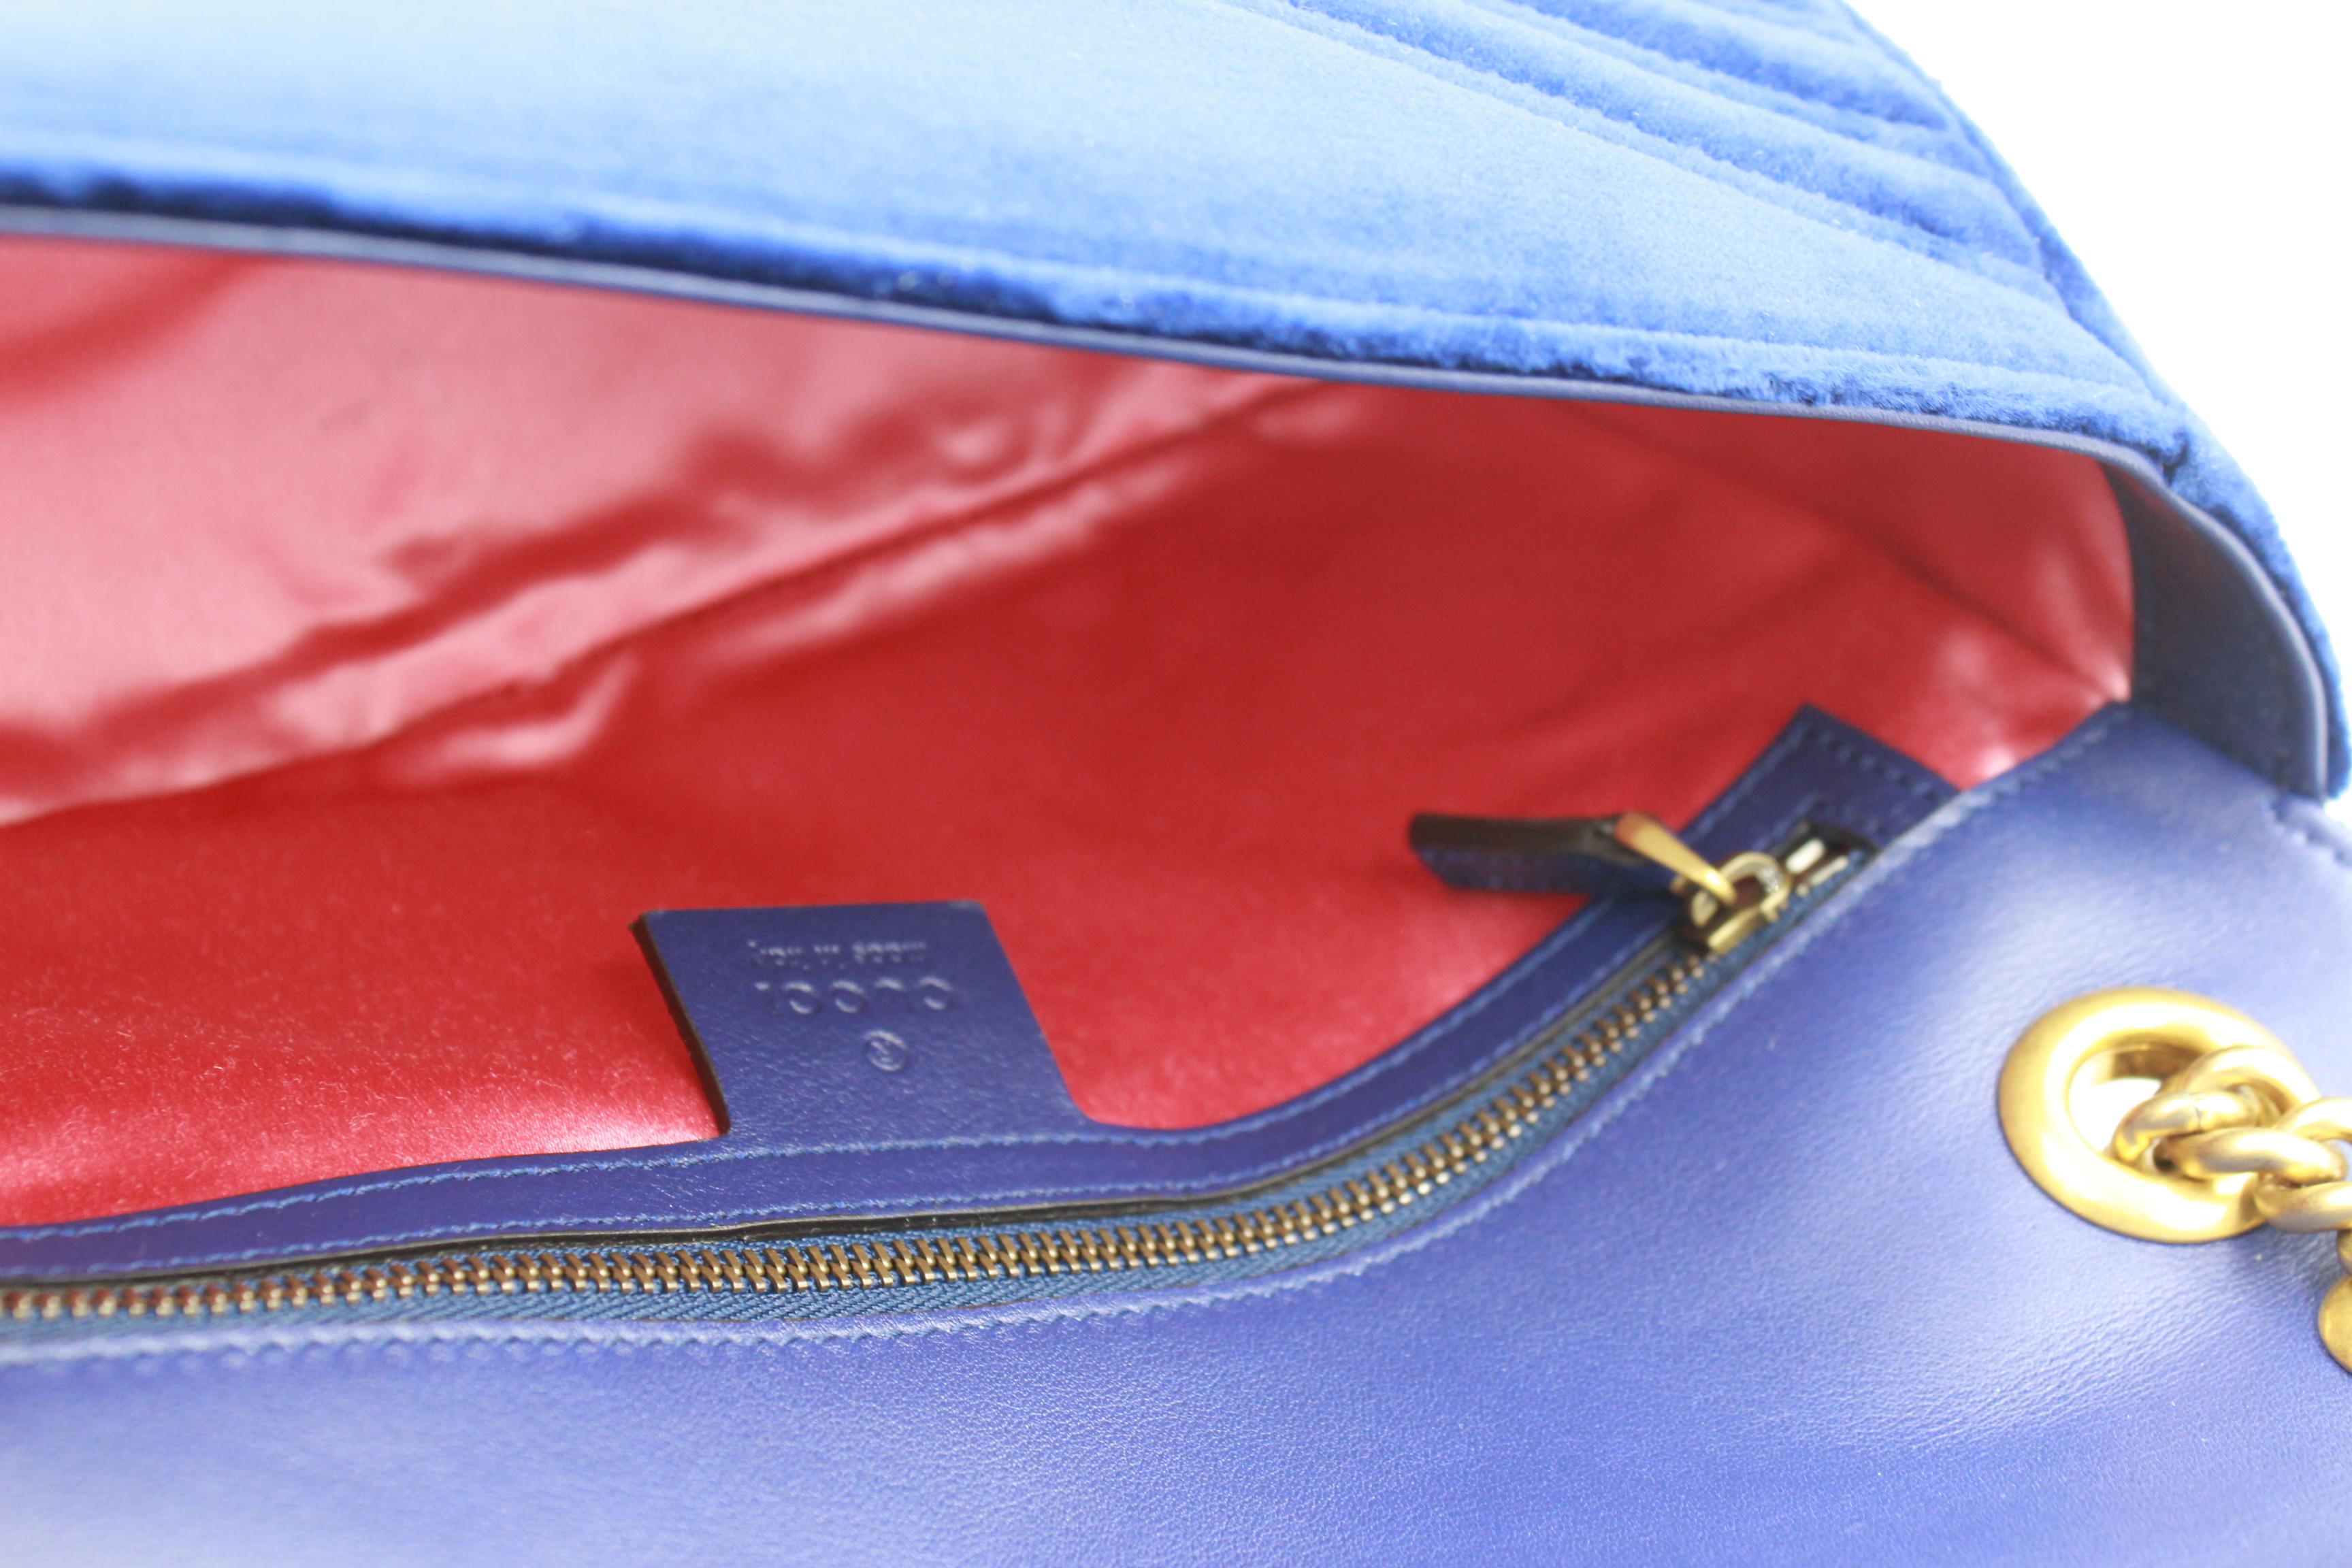 Blue Gucci Marmont GG handbag in dark blue velvet.